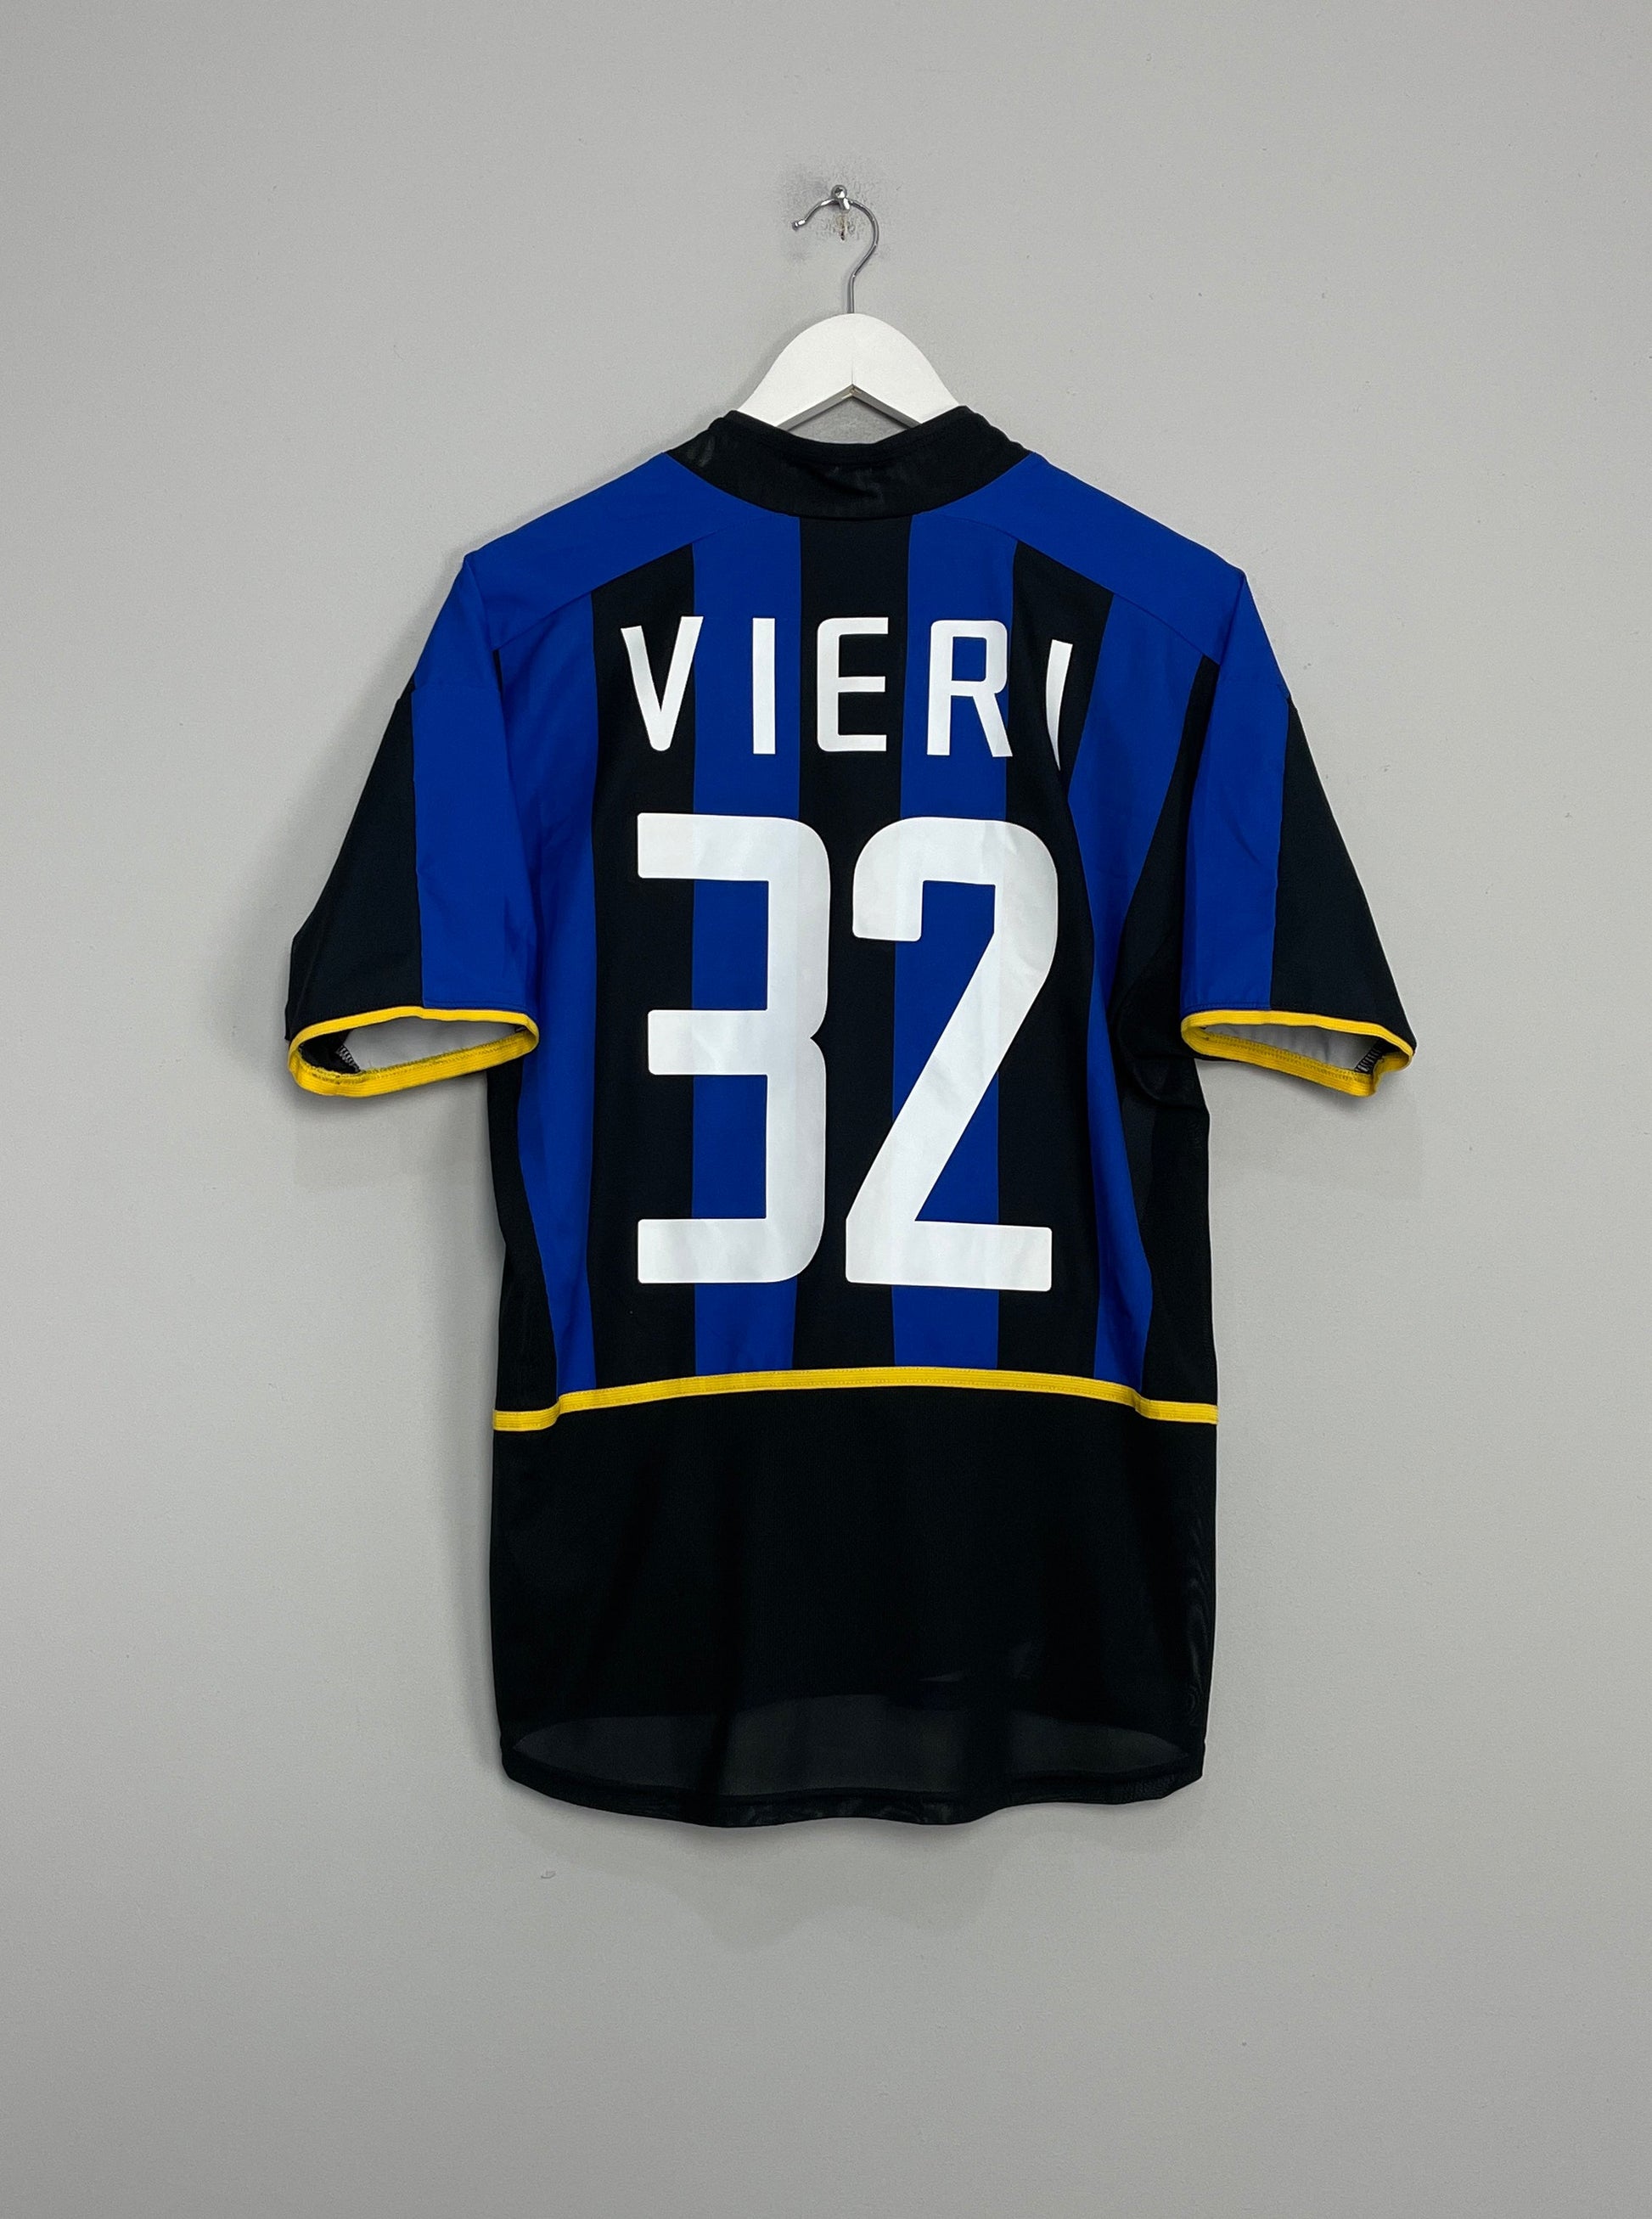 Image of the Inter Milan Vieri shirt from the 2002/3 season